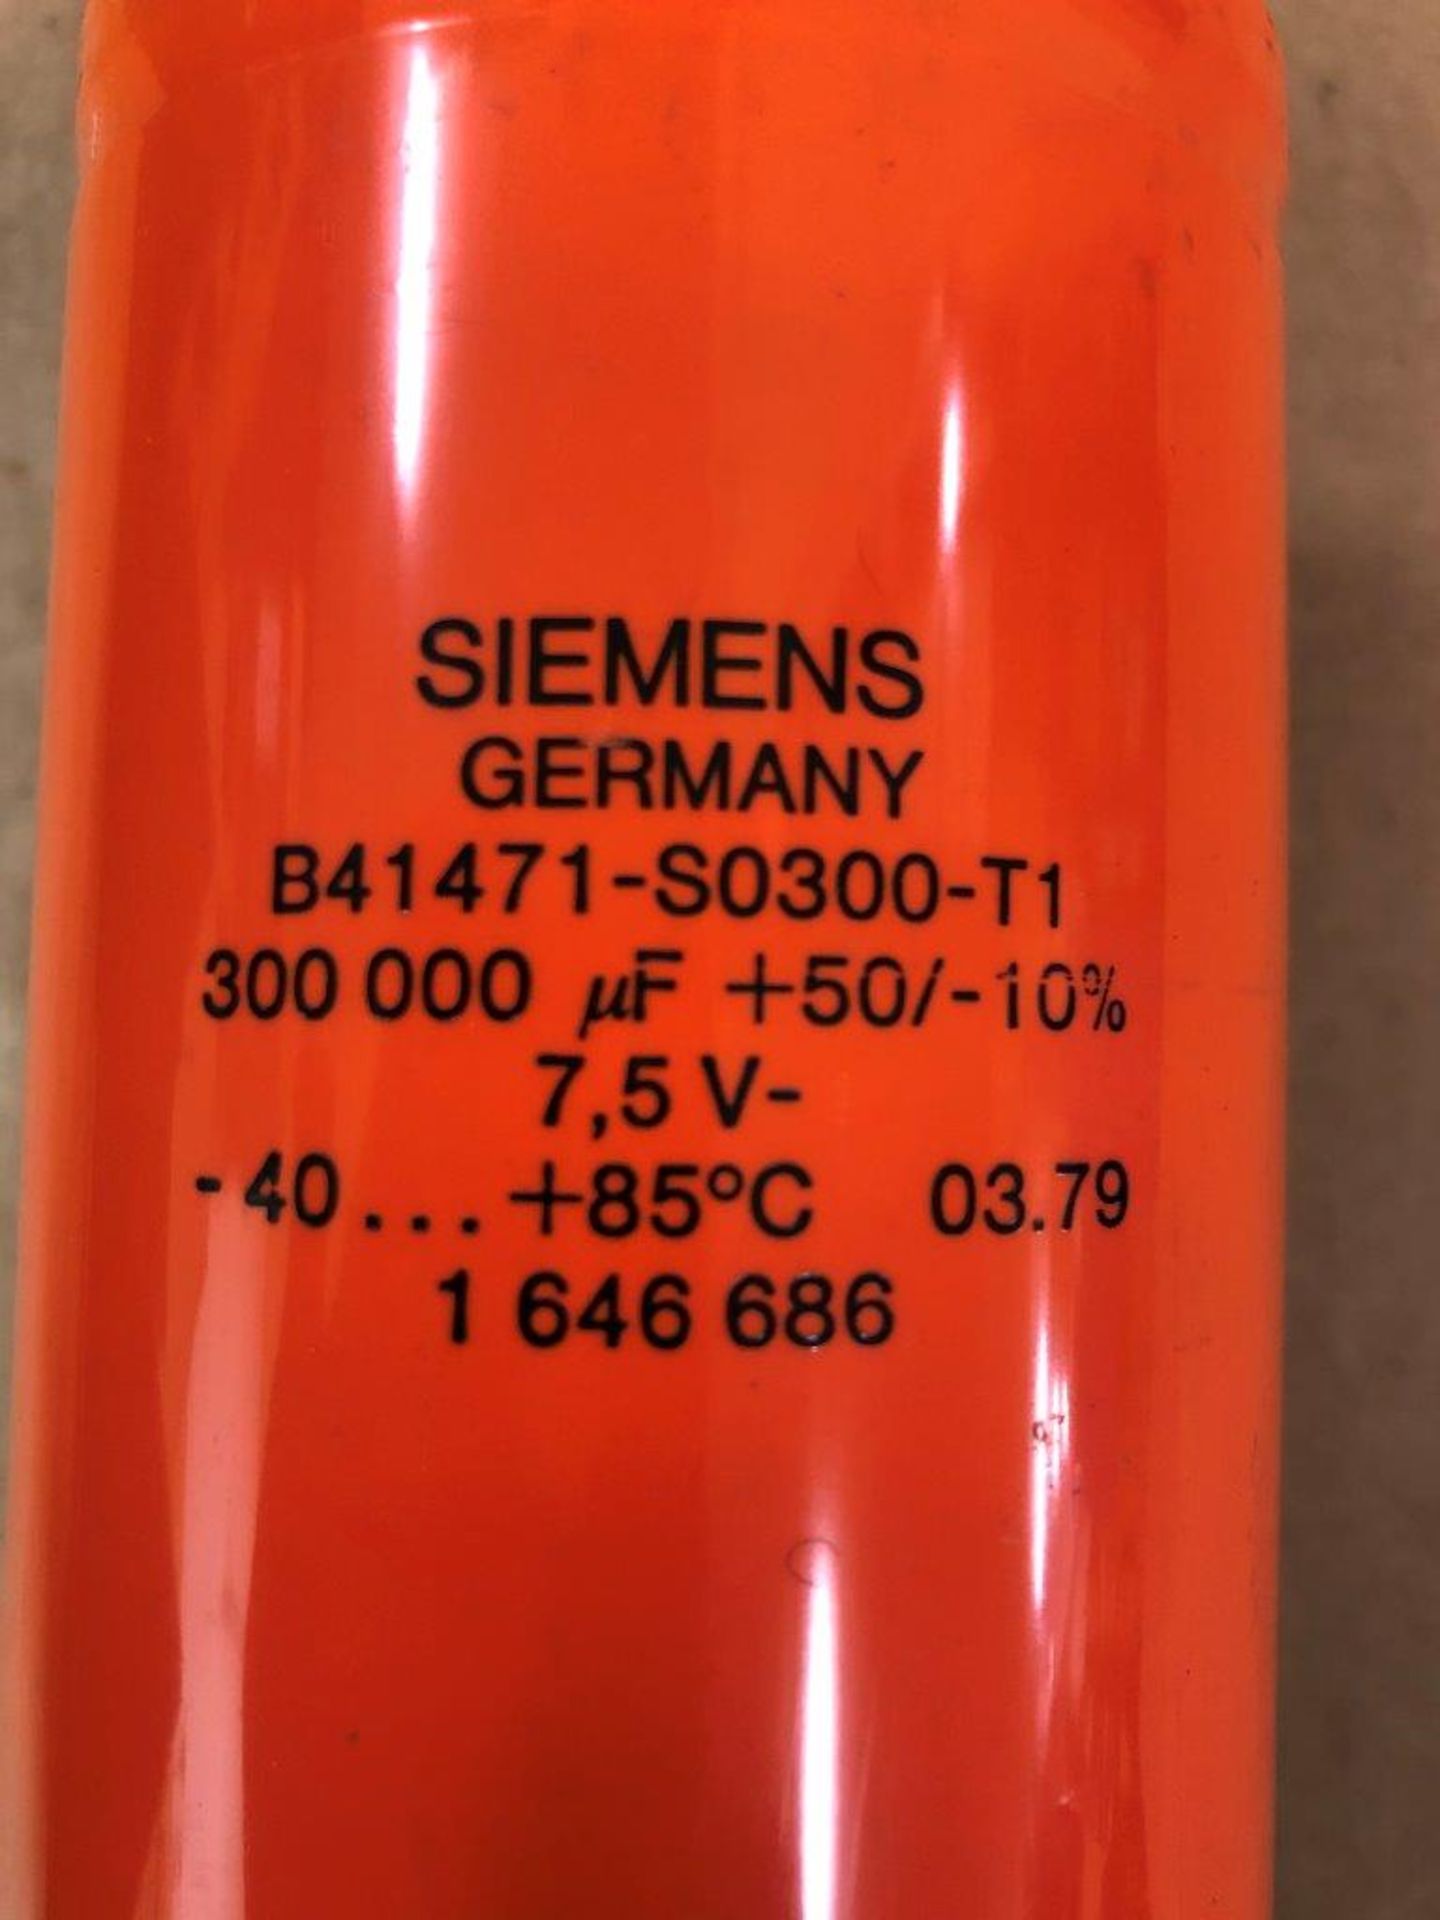 Large Electrolytic Capacitors 10 each Siemens 300,000µF 7.5V Electrolytic capacitors in box.